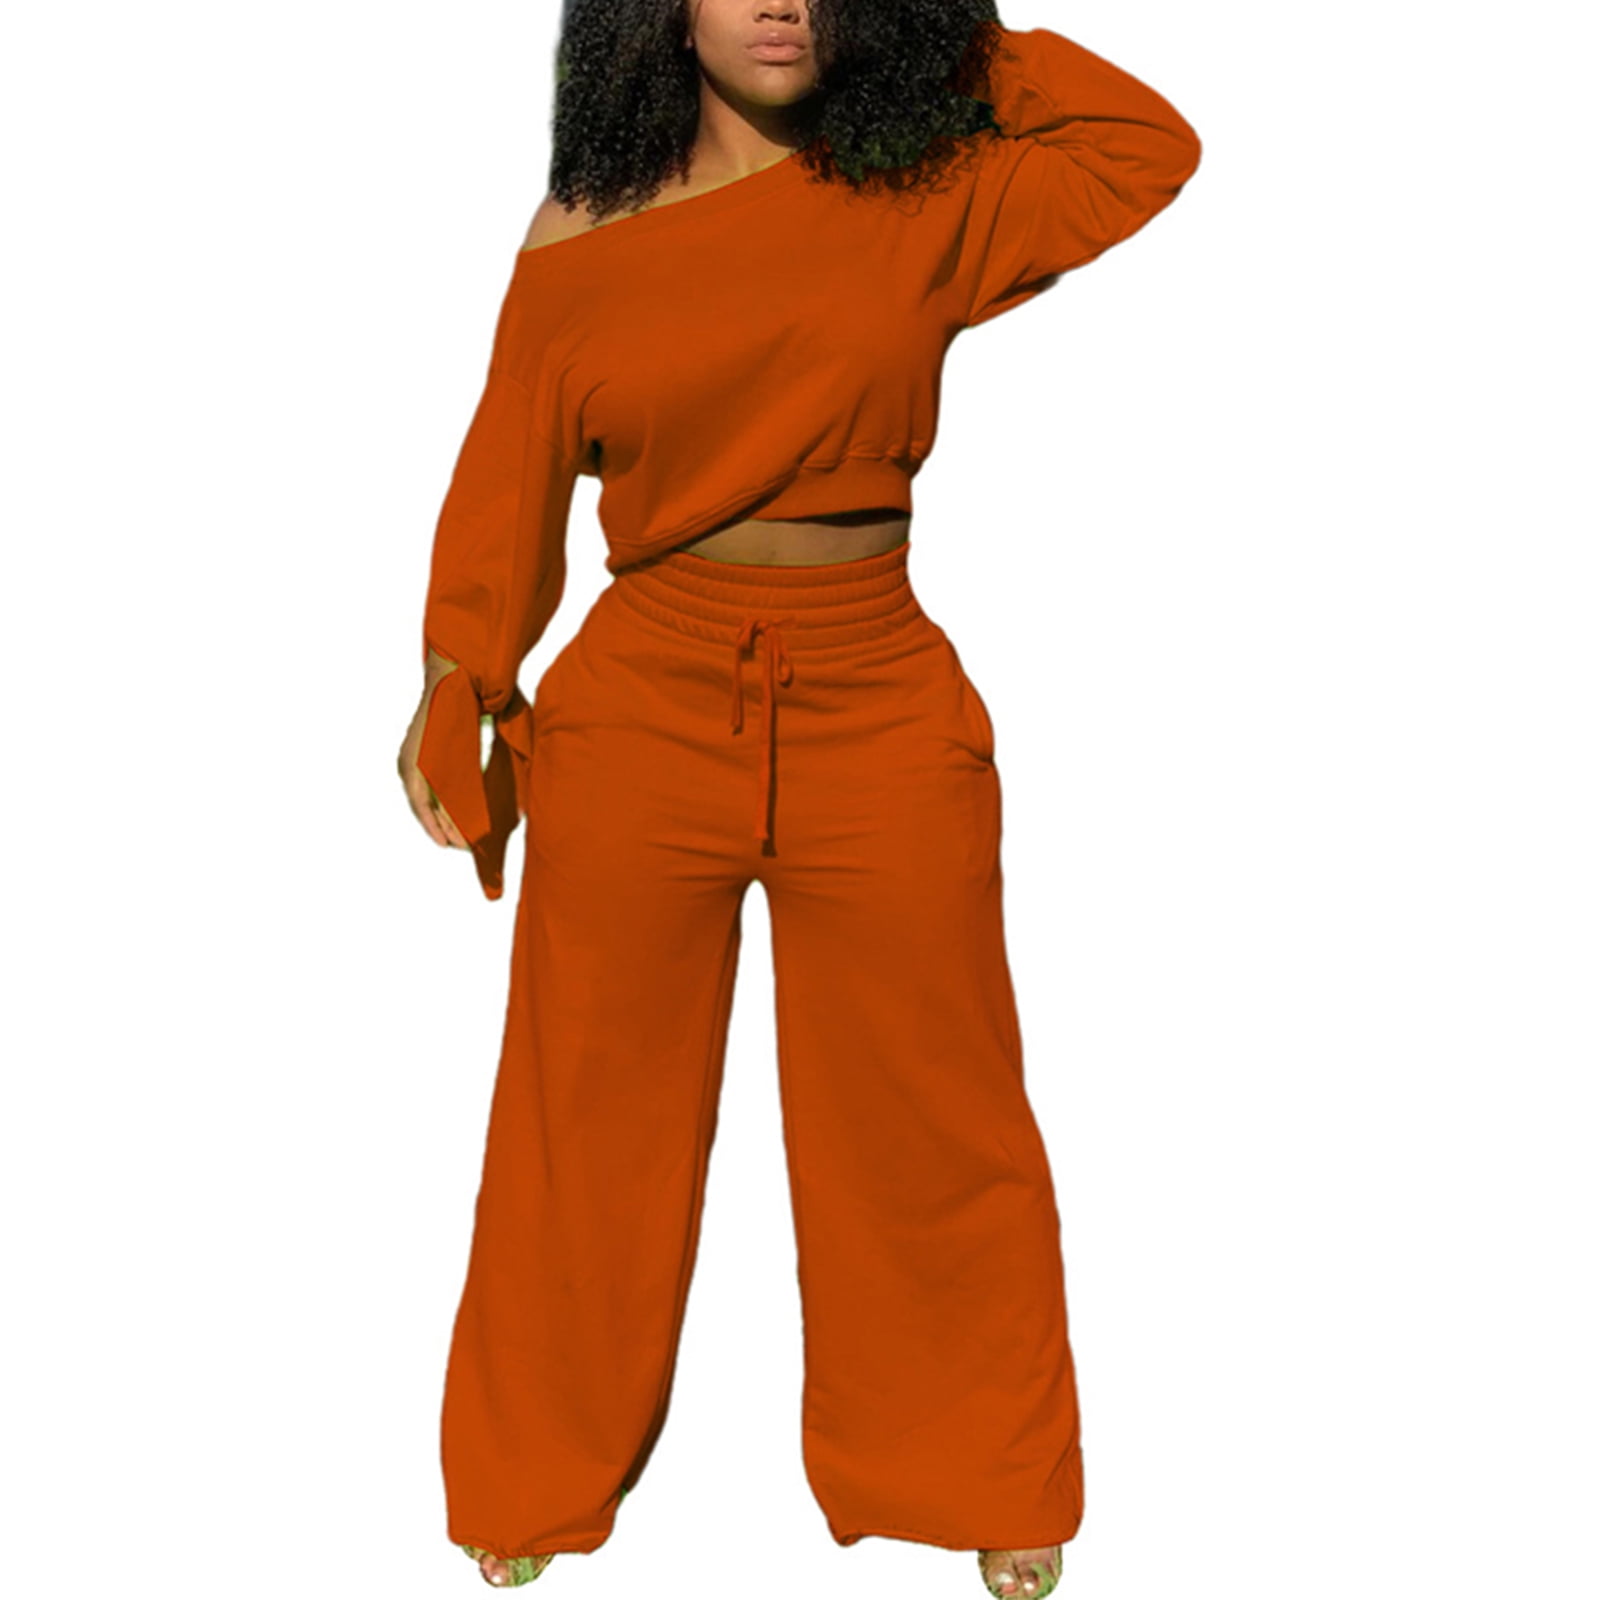 Remelon Womens Tie Dye Print 2 Piece Jumpsuits Outfits Long Sleeve Slanted T Shirts Top Bodycon Pants Set